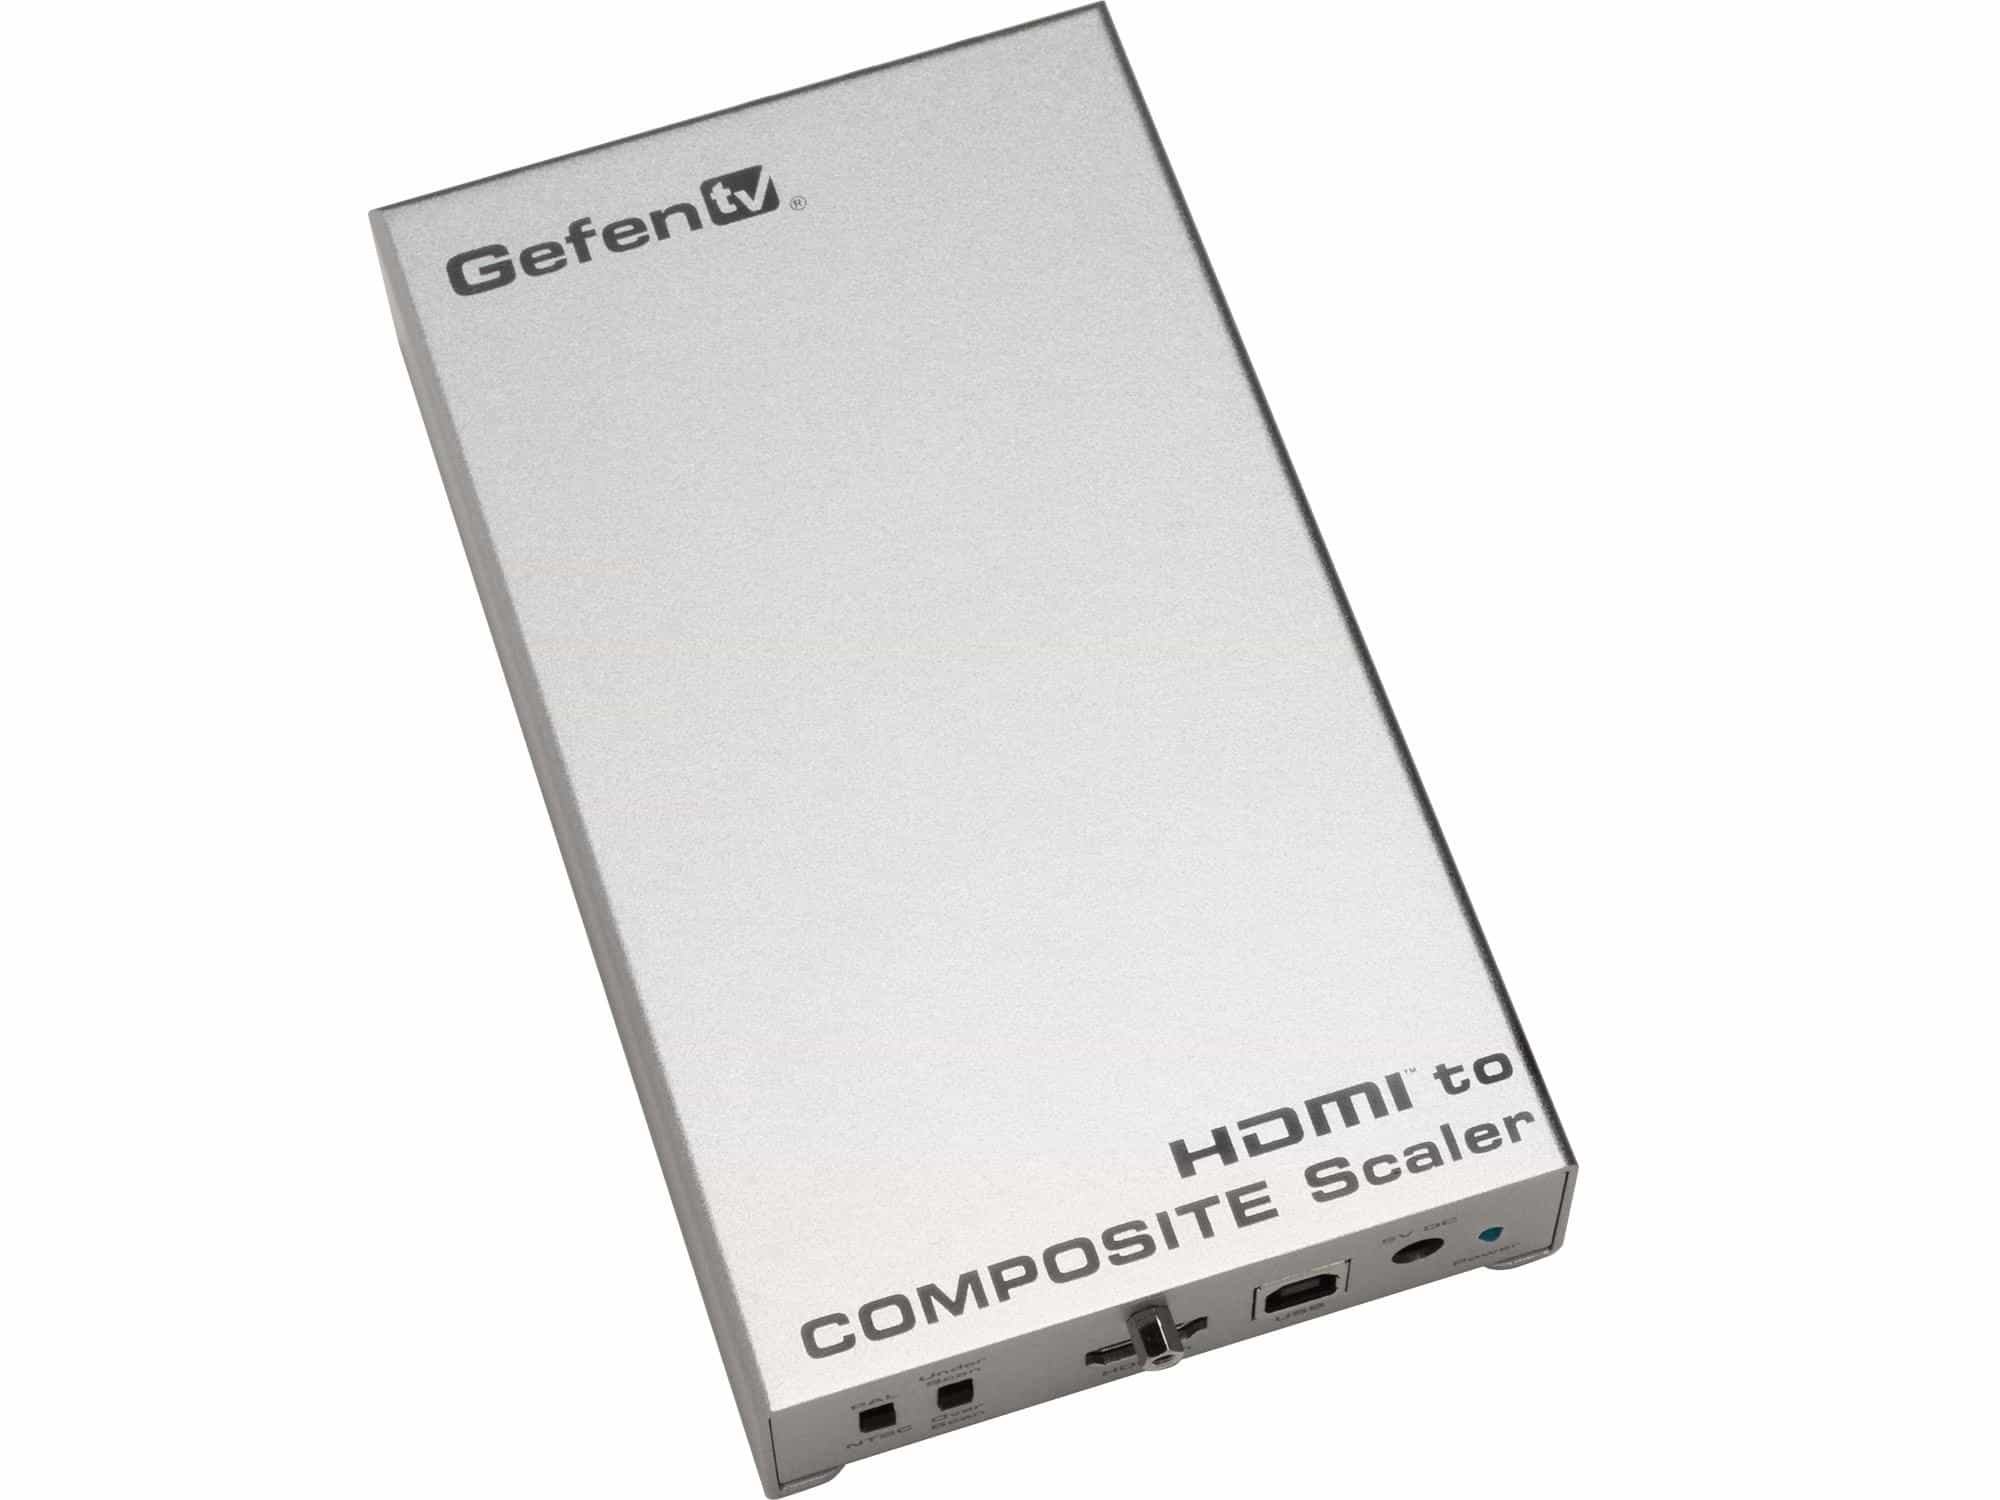 Gefen HDMI To Composite/S-Video Scaler